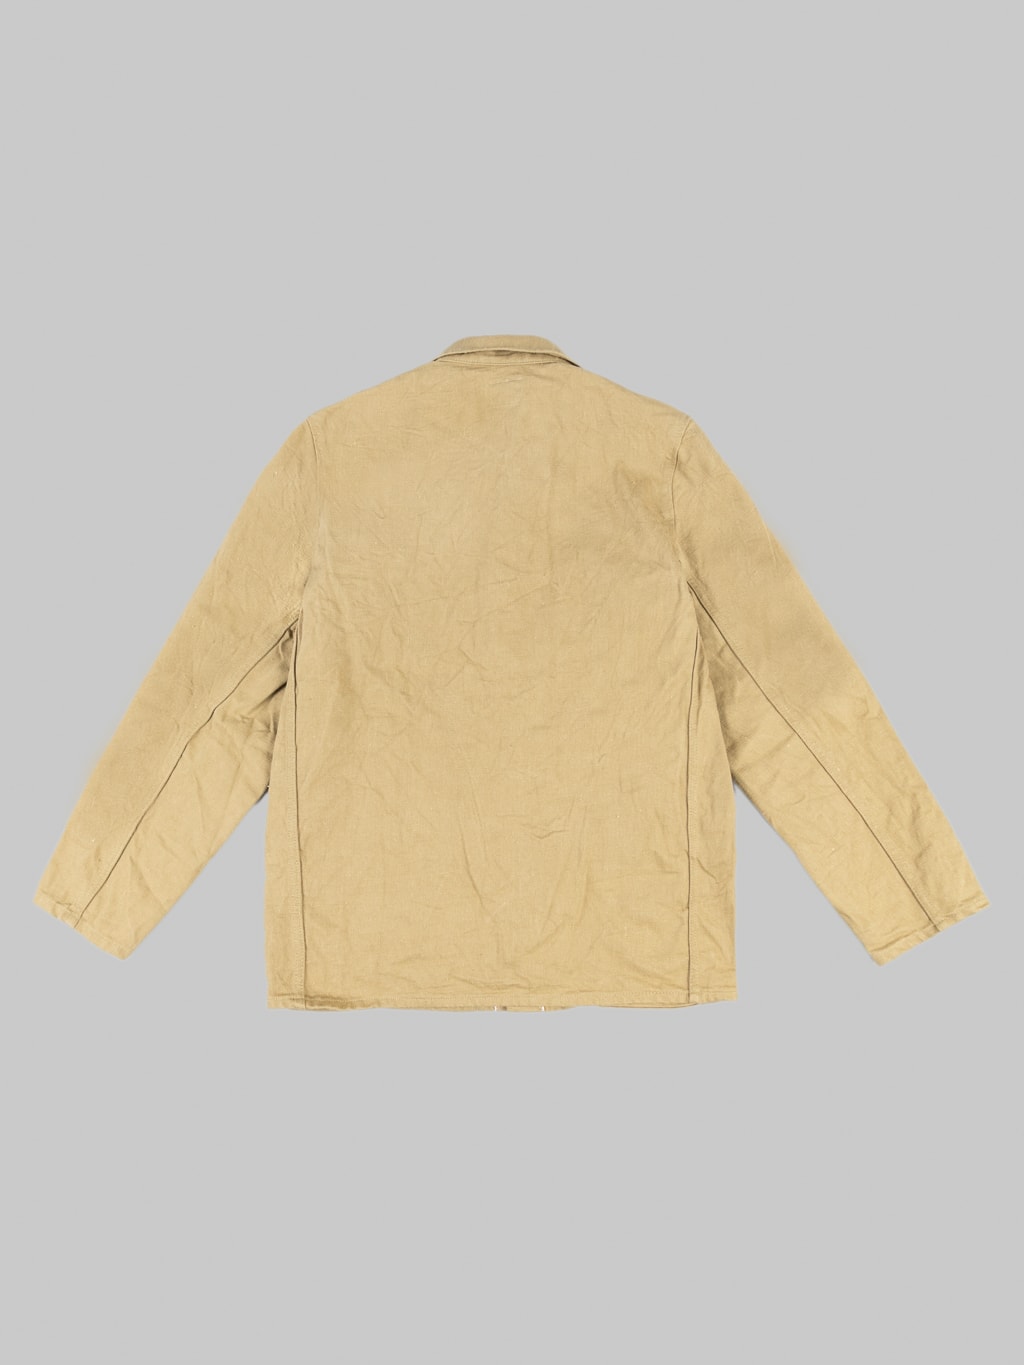 ONI Denim 03501 Sulfur Coverall Jacket Khaki Beige 100 cotton